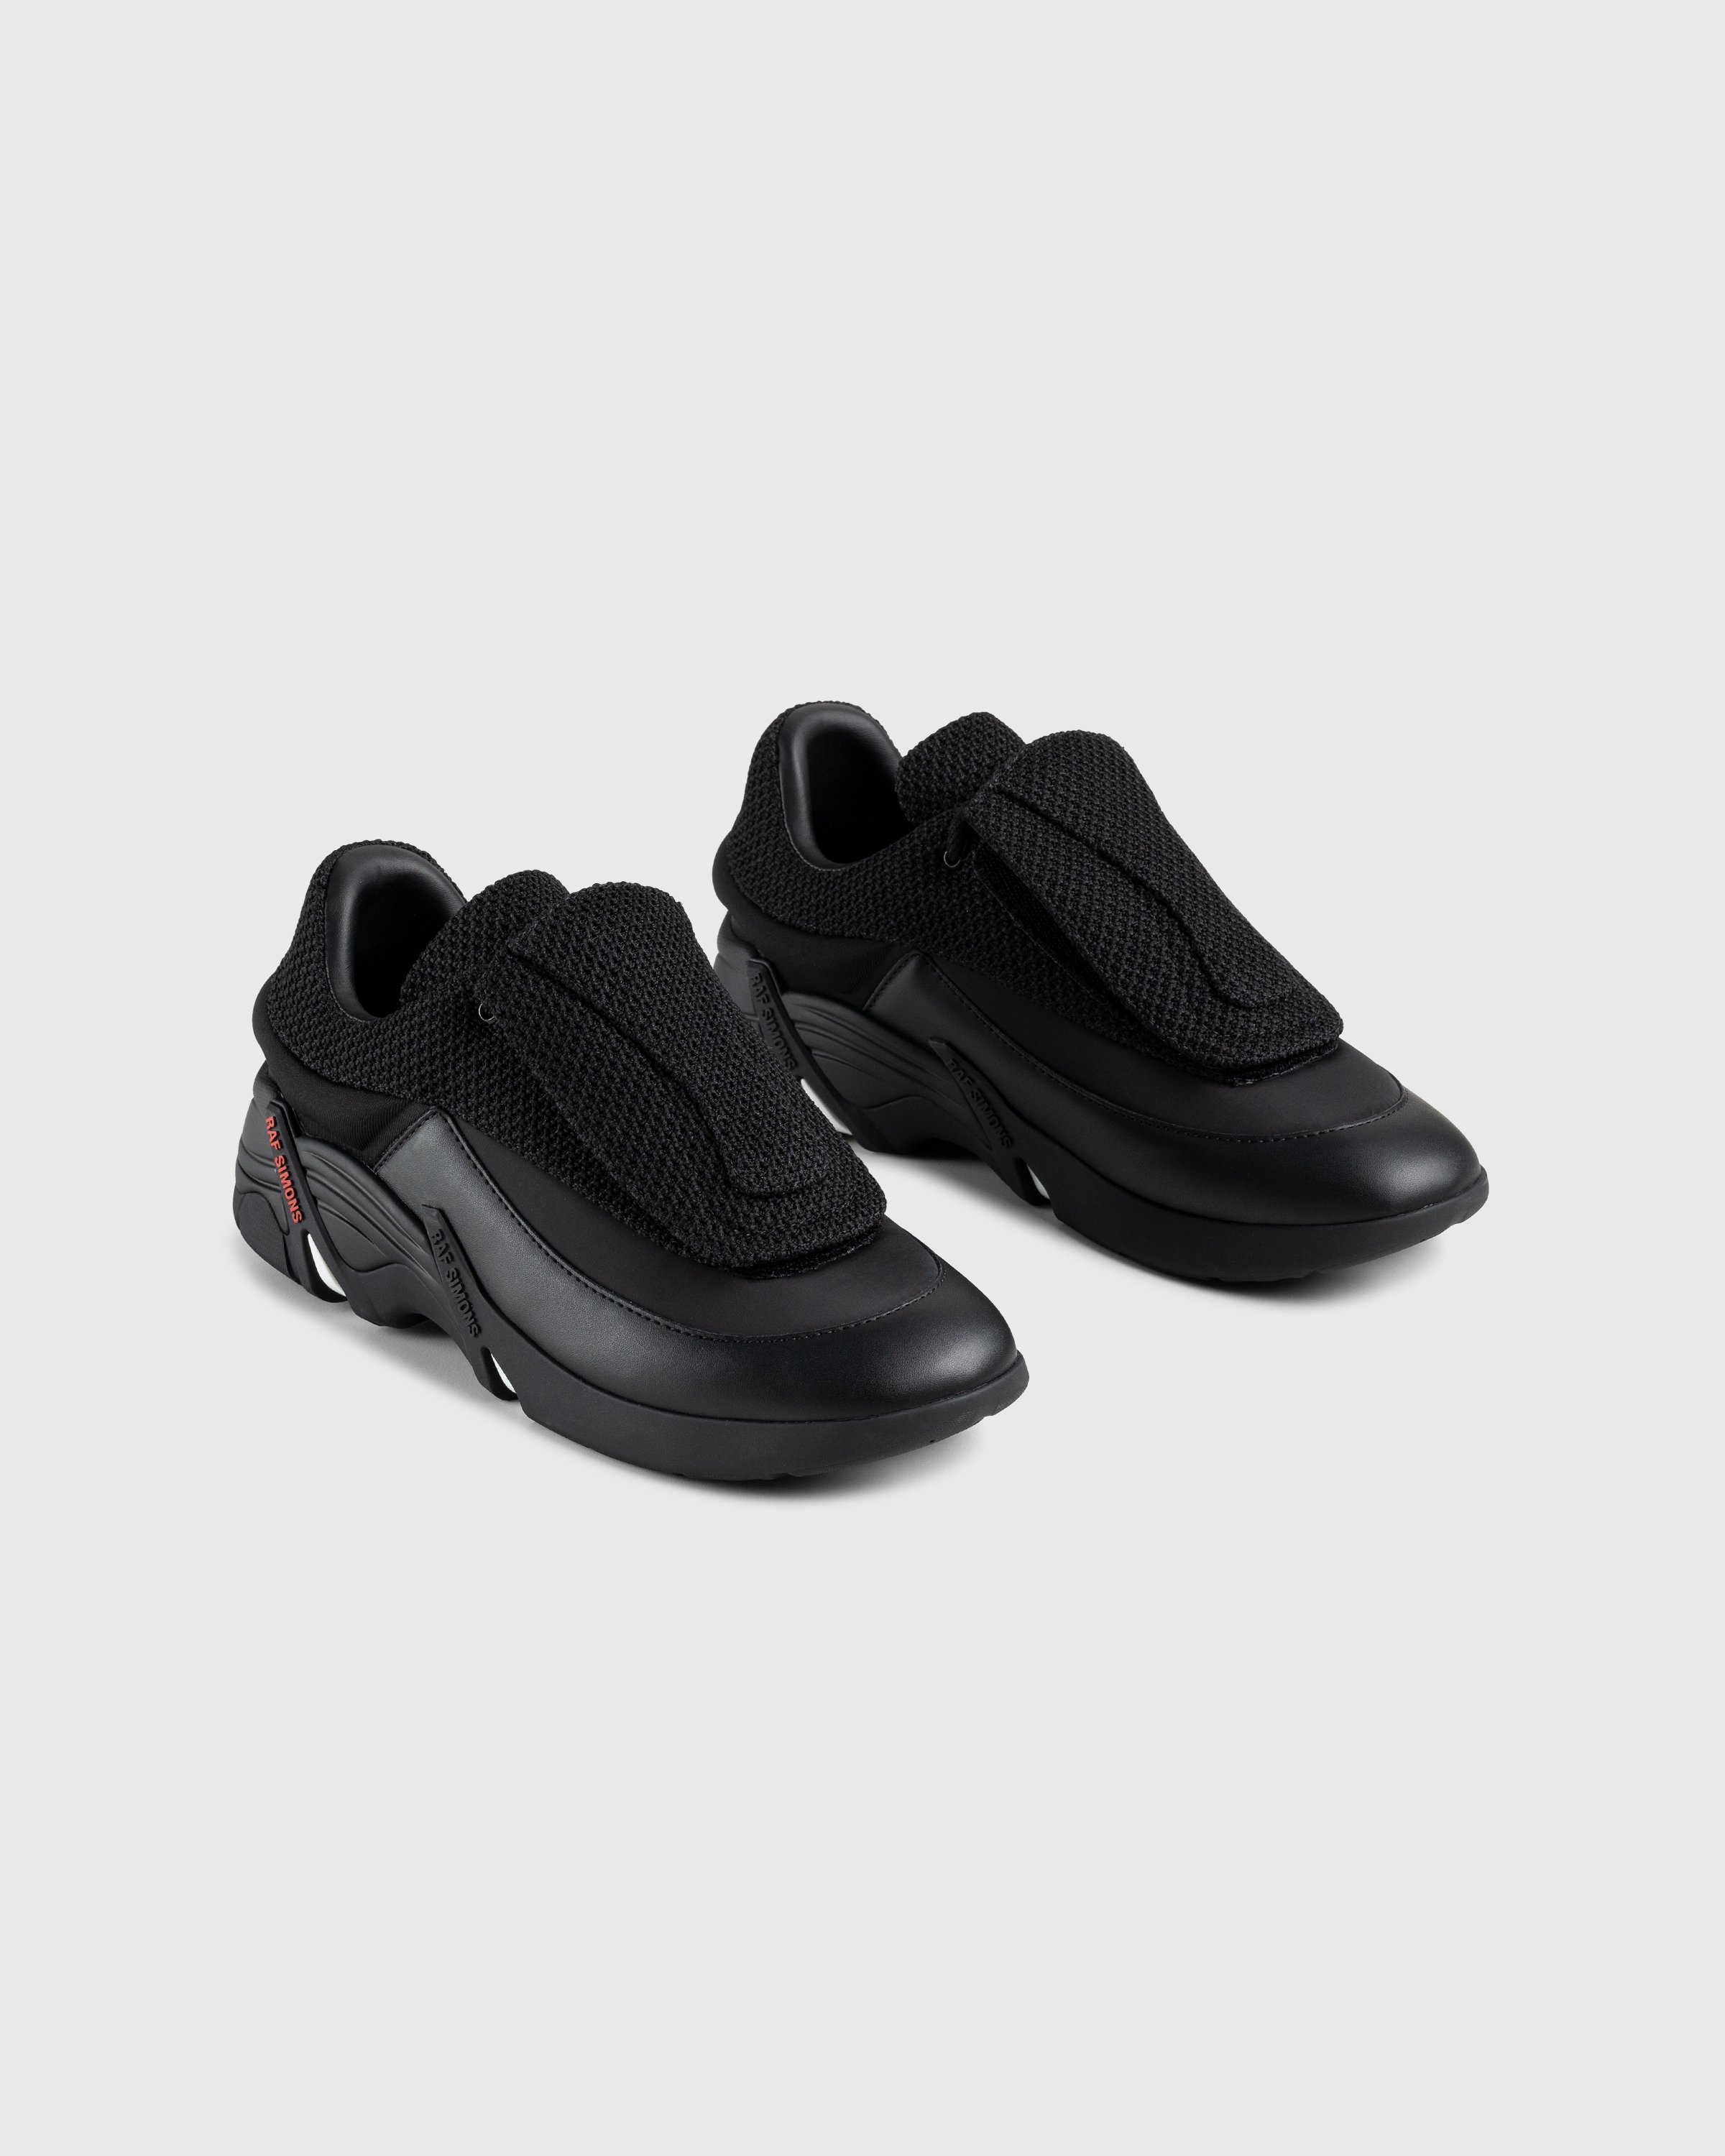 Raf Simons - Antei Black - Footwear - Black - Image 3